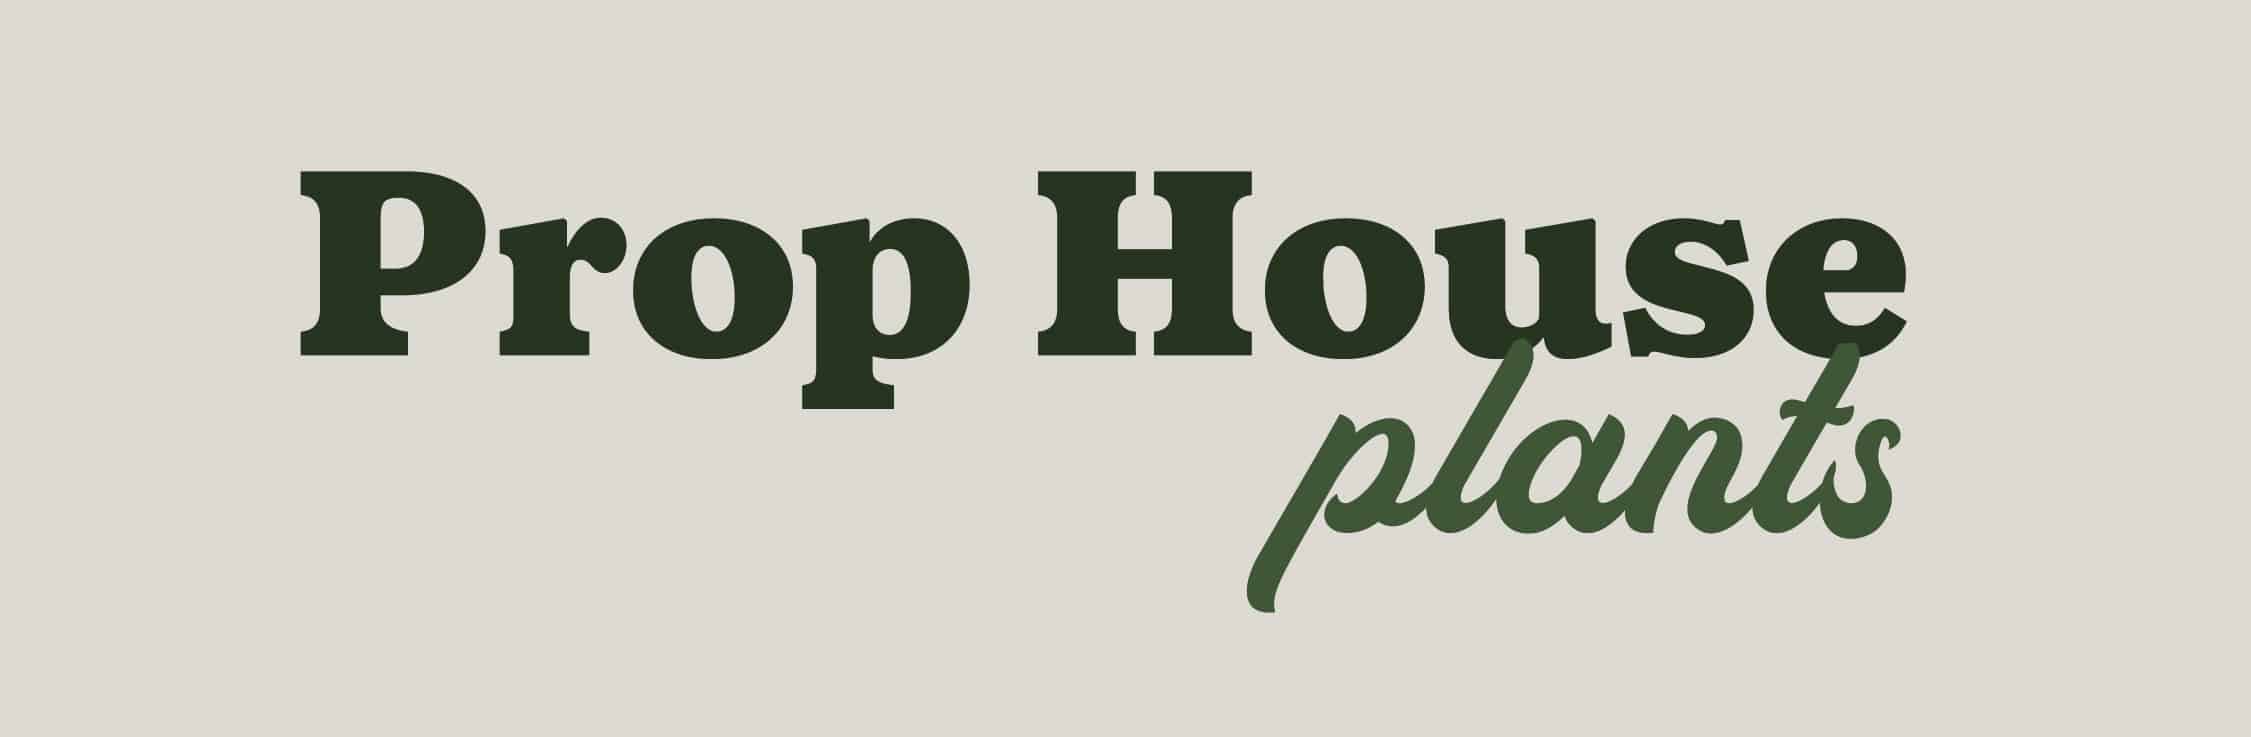 Prop_House_Branding_By_Stellen_Design_Horizontal Logo